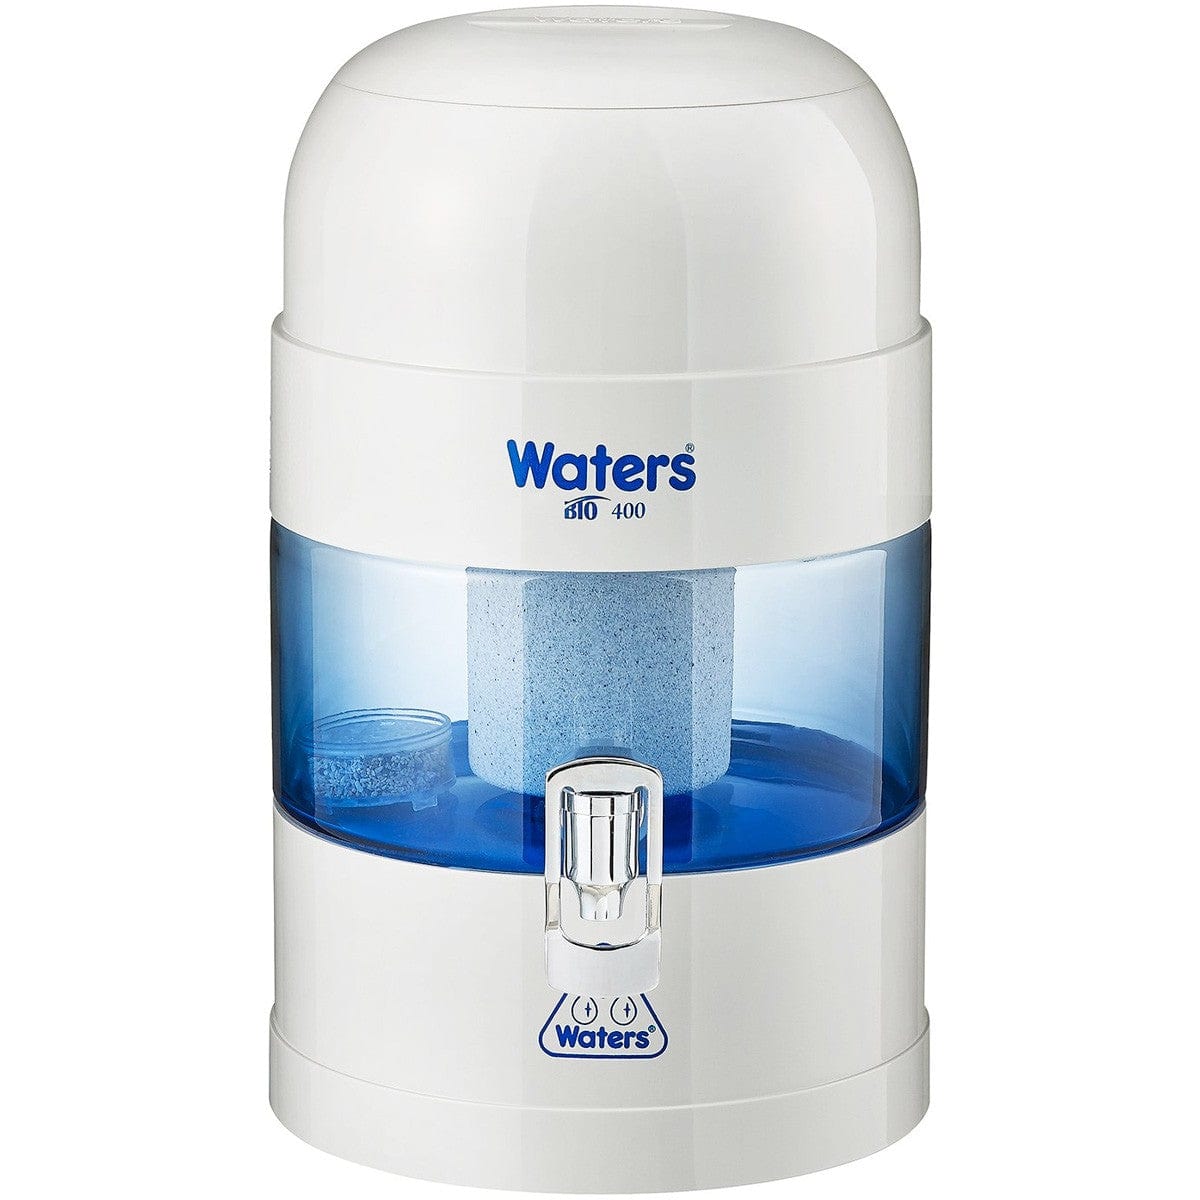 Waters Co BIO 400 Benchtop Alkaline Water Filter 5.25L - White